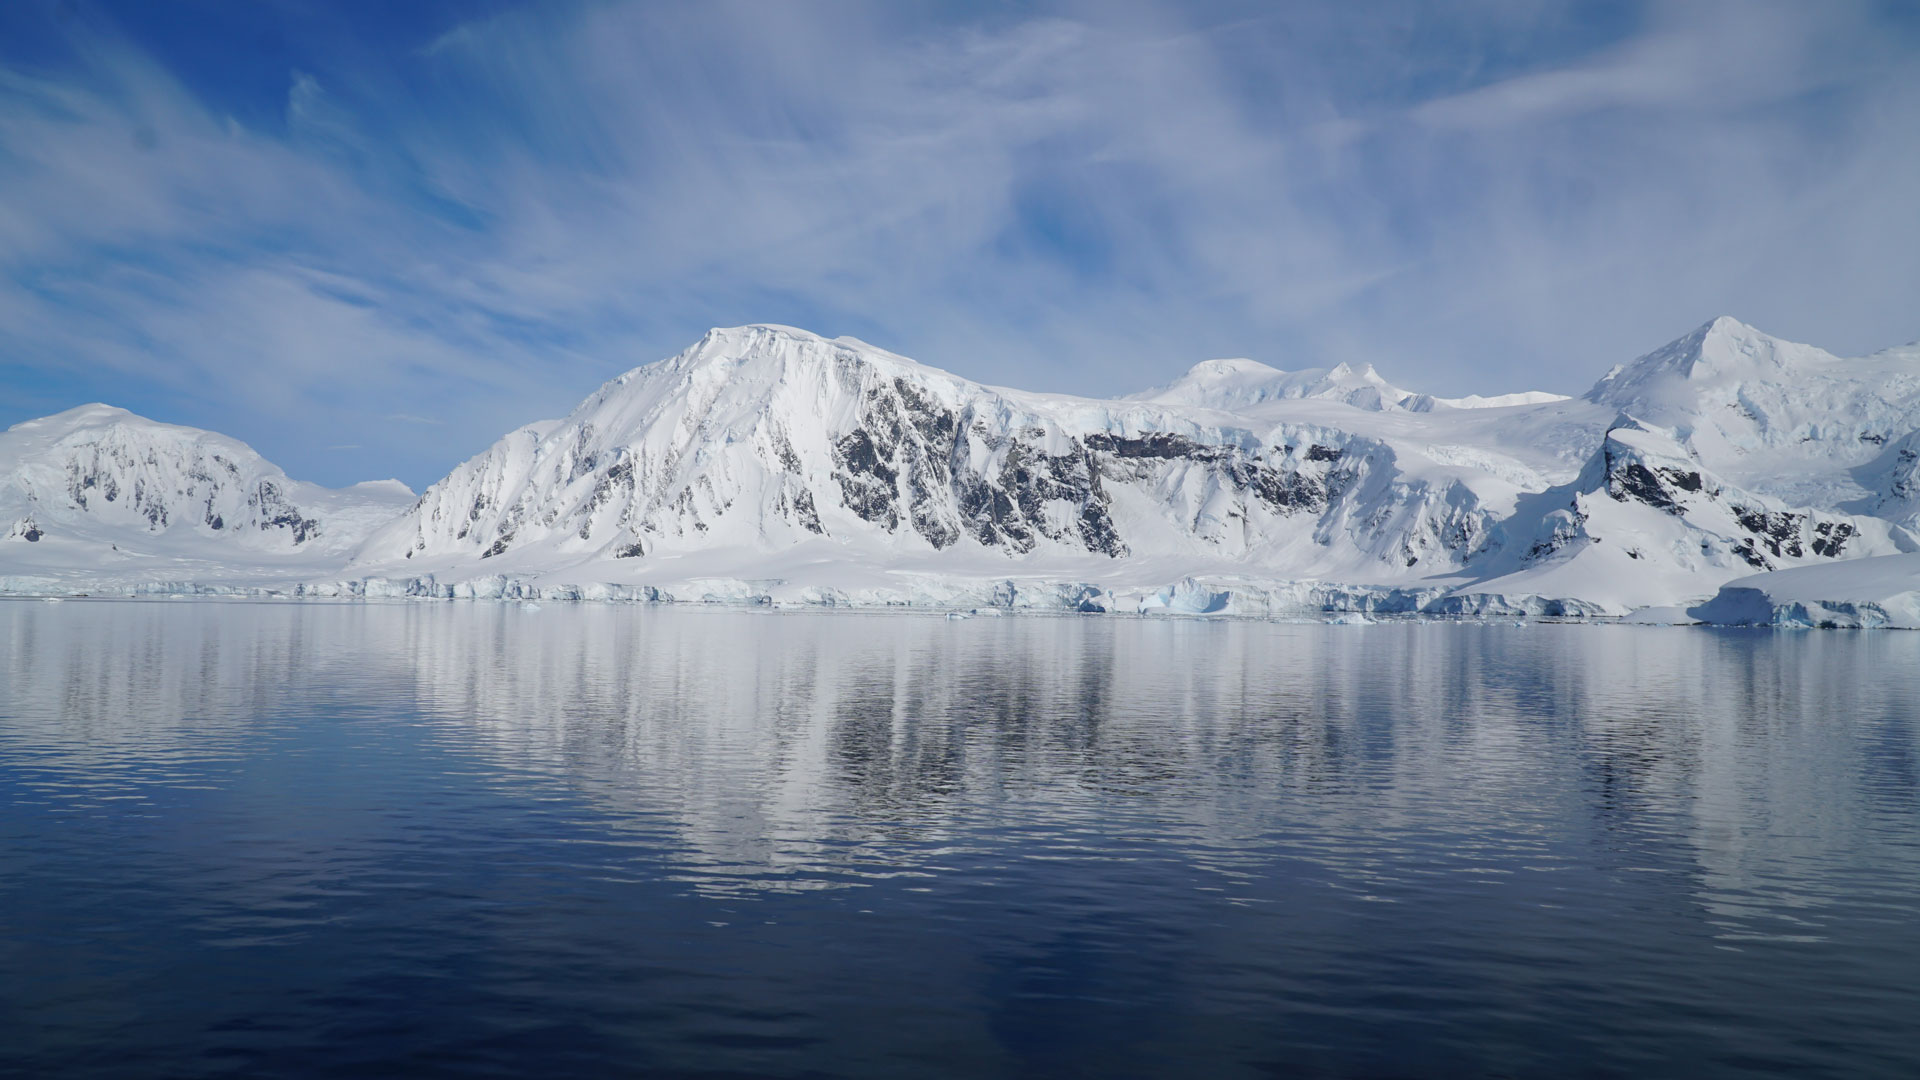 Day 22, Dorian Bay – Antarctica Day 2